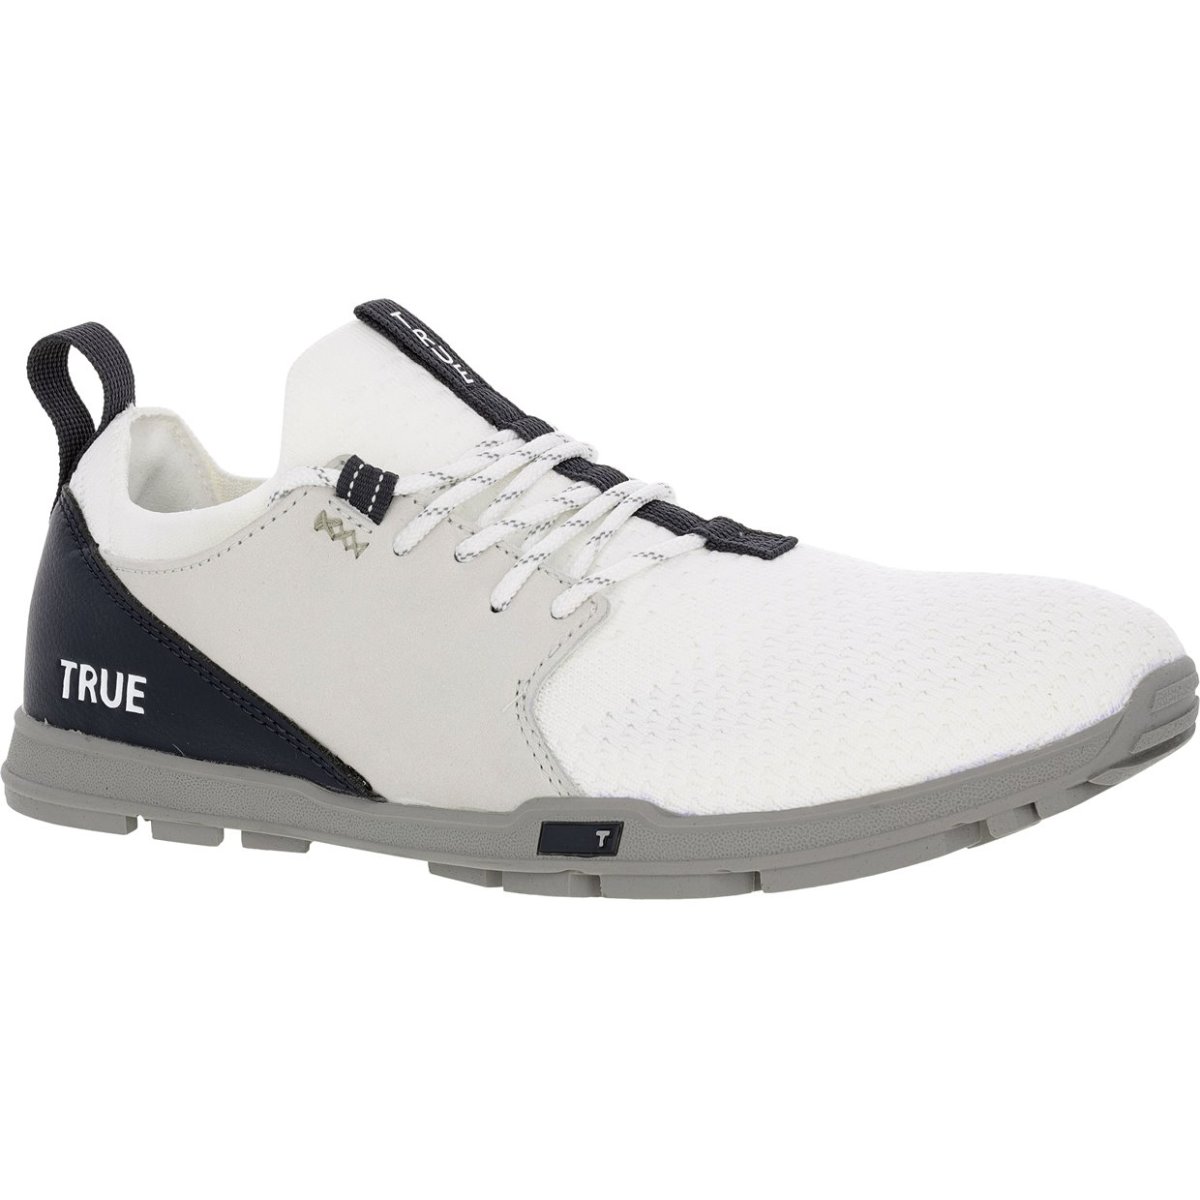 Shop True Linkswear golf shoes for men on Sports Illustrated Golf.